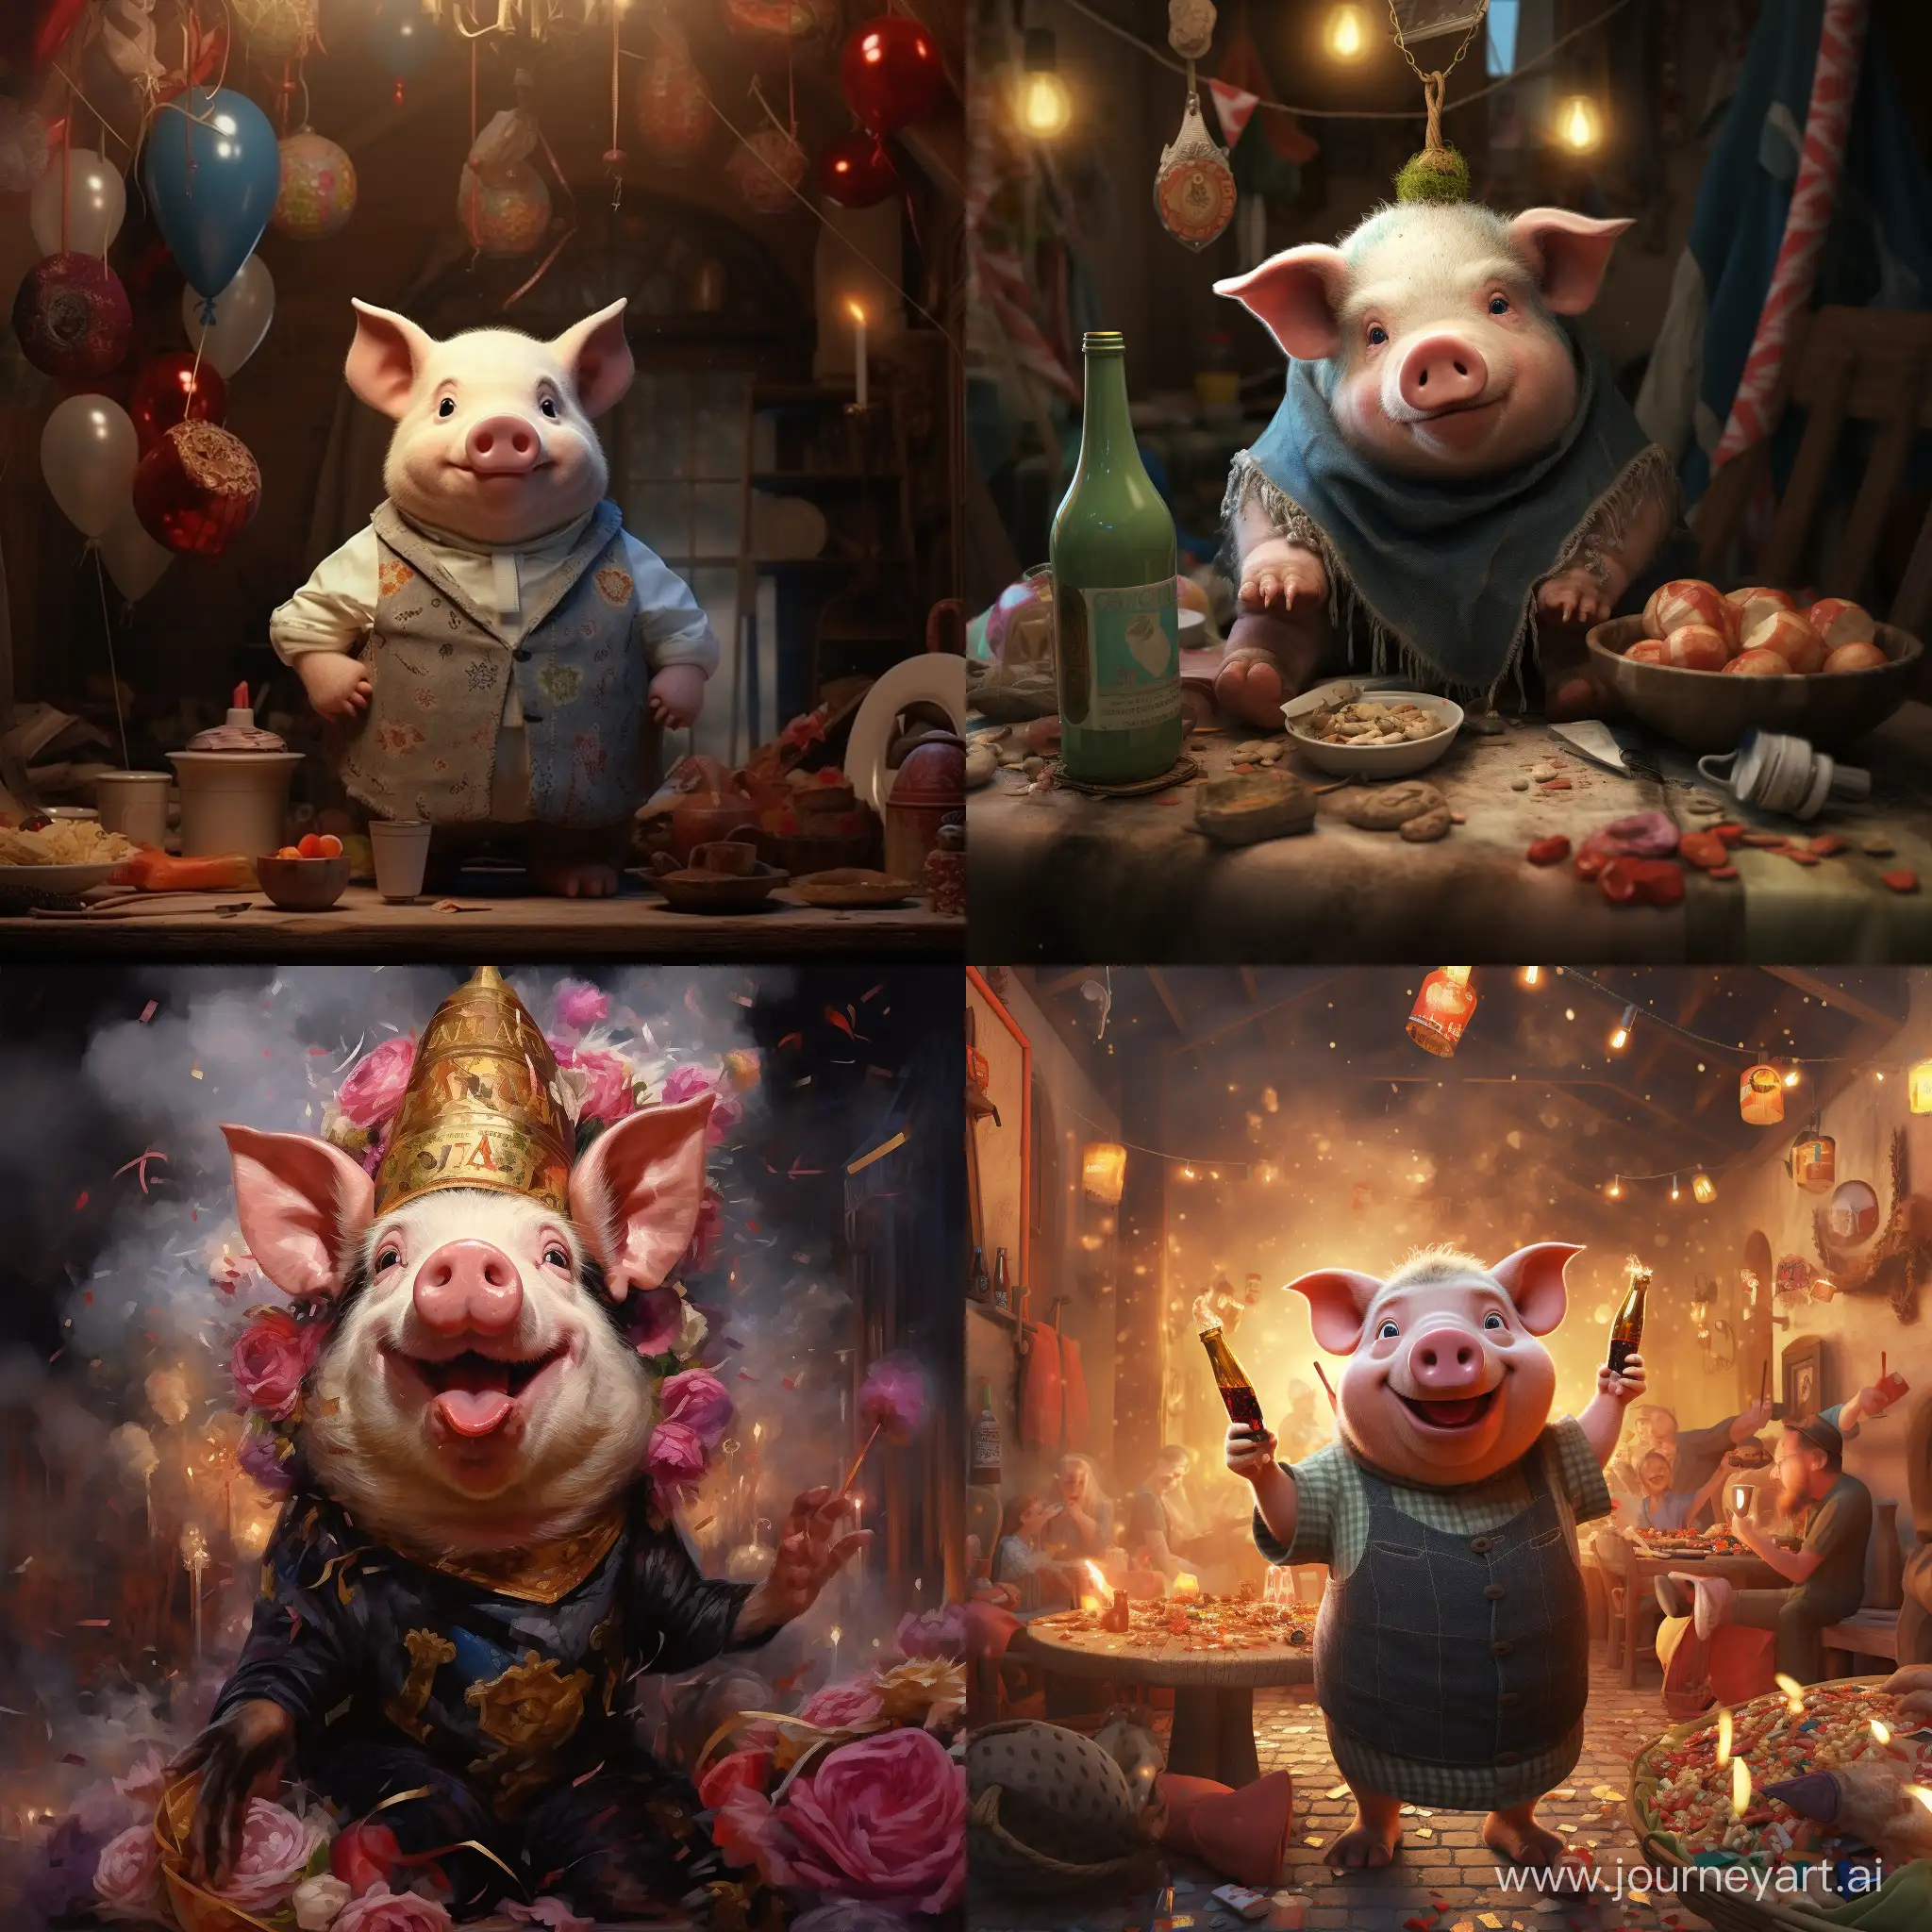 New-Year-Celebration-Pig-in-Festive-Decor